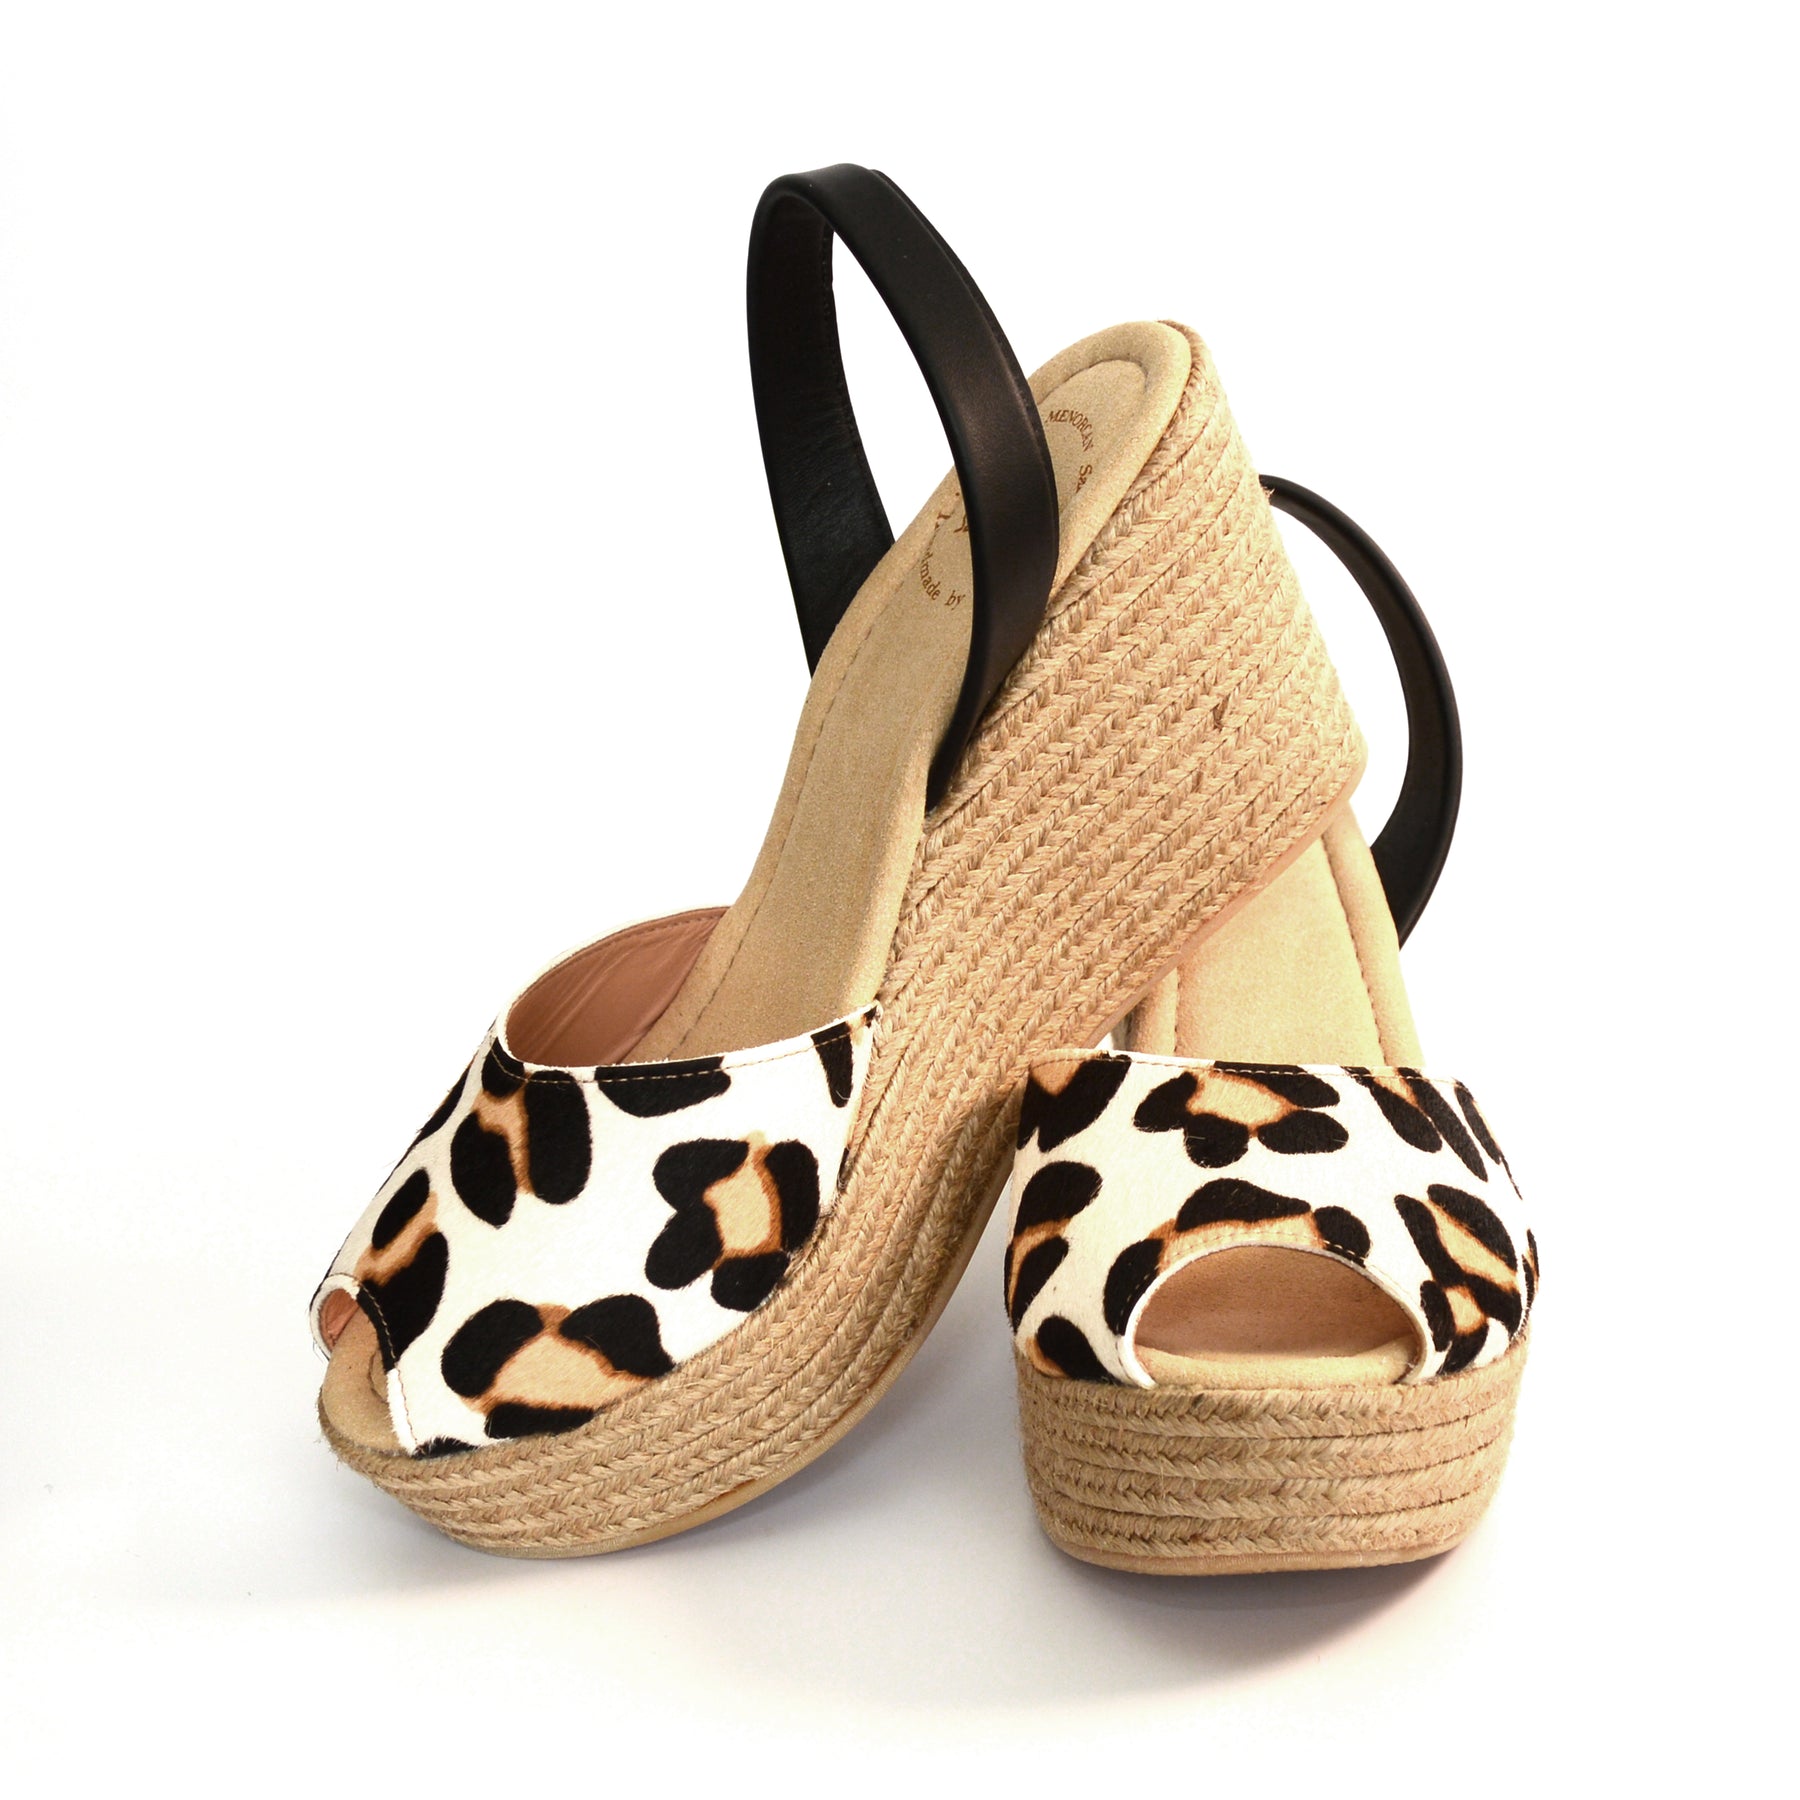 Señorita Snow Leopard Leather Mid Height Espadrille Wedge Avarcas Sandals -  Palmaira Sandals Menorcan Avarcas